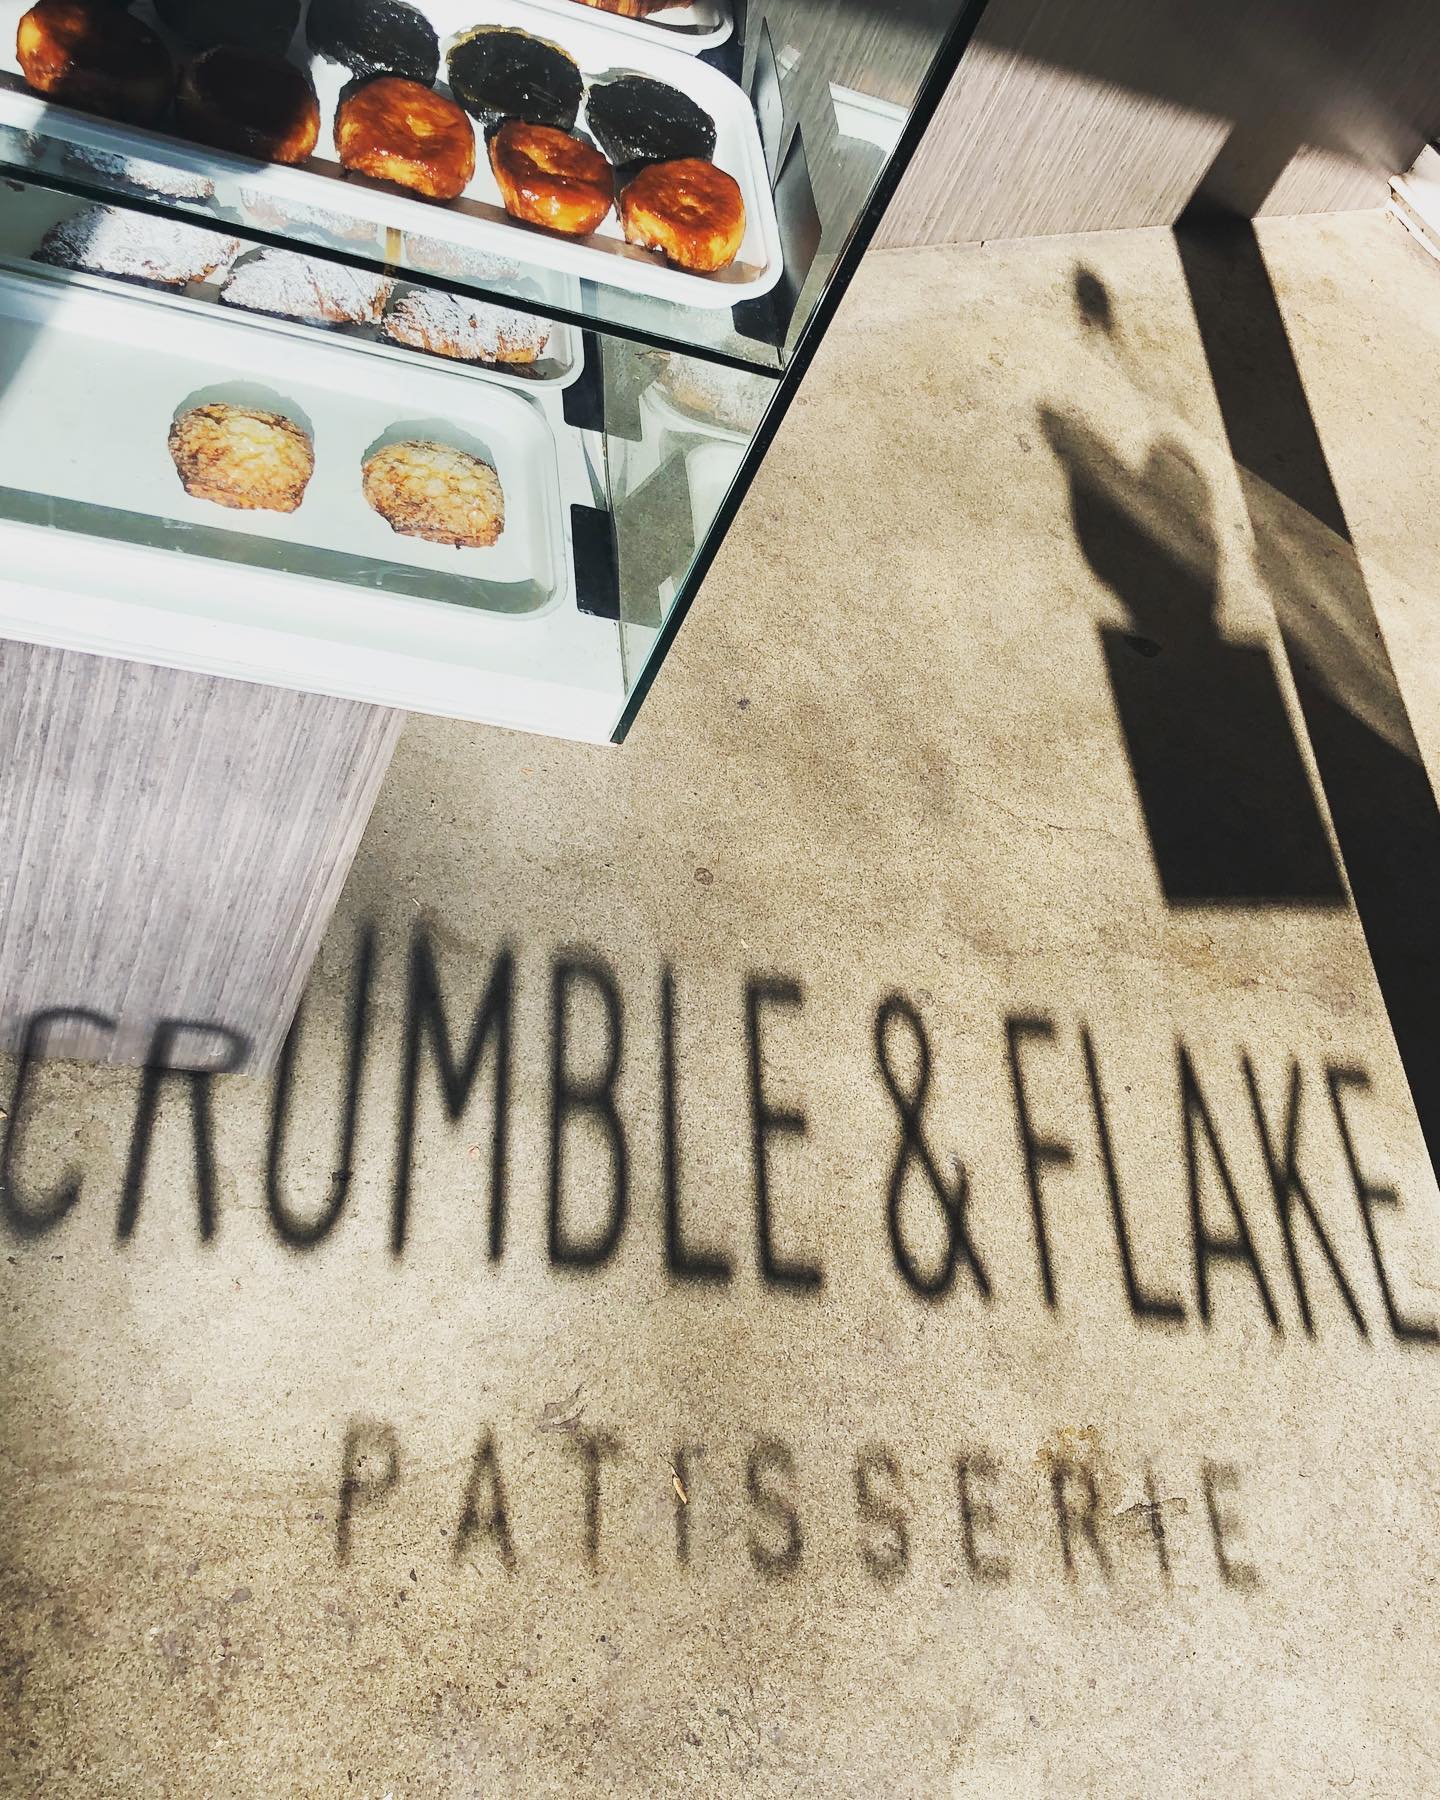 Crumble & Flake Patisserie